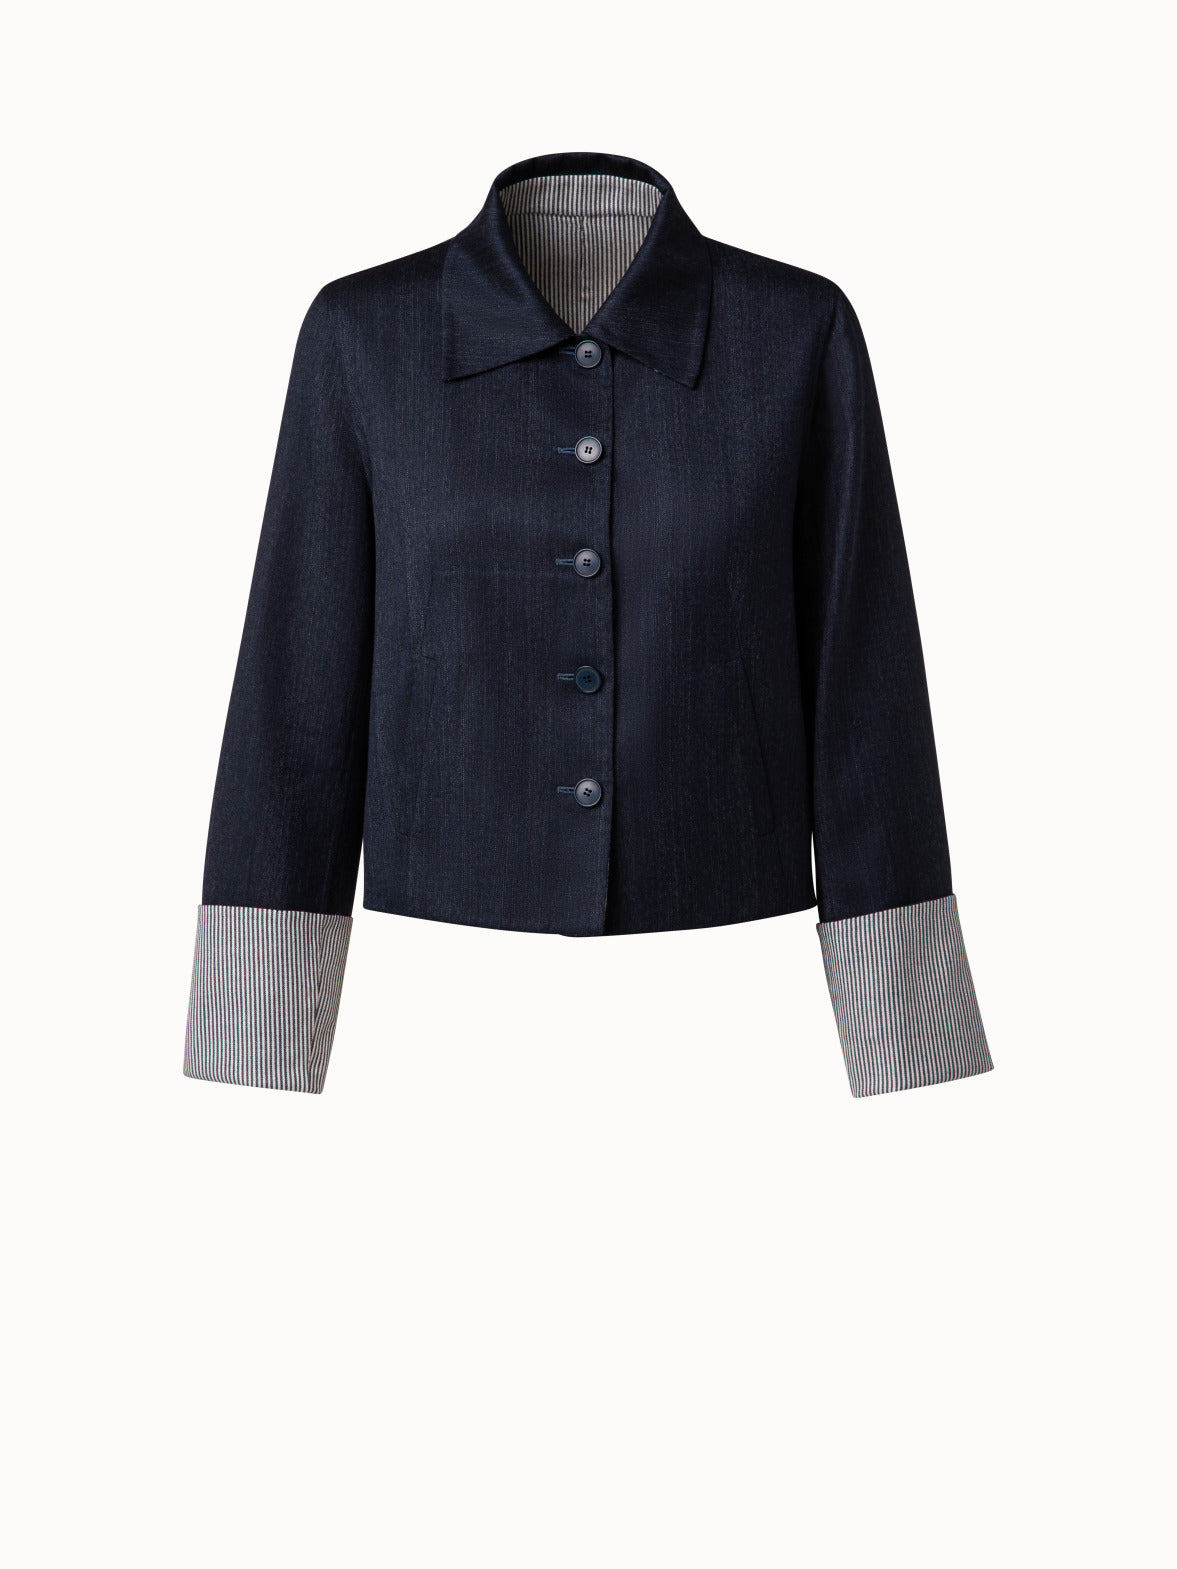 Cotton Linen Double-Face Reversible 3-in-1 Jacket